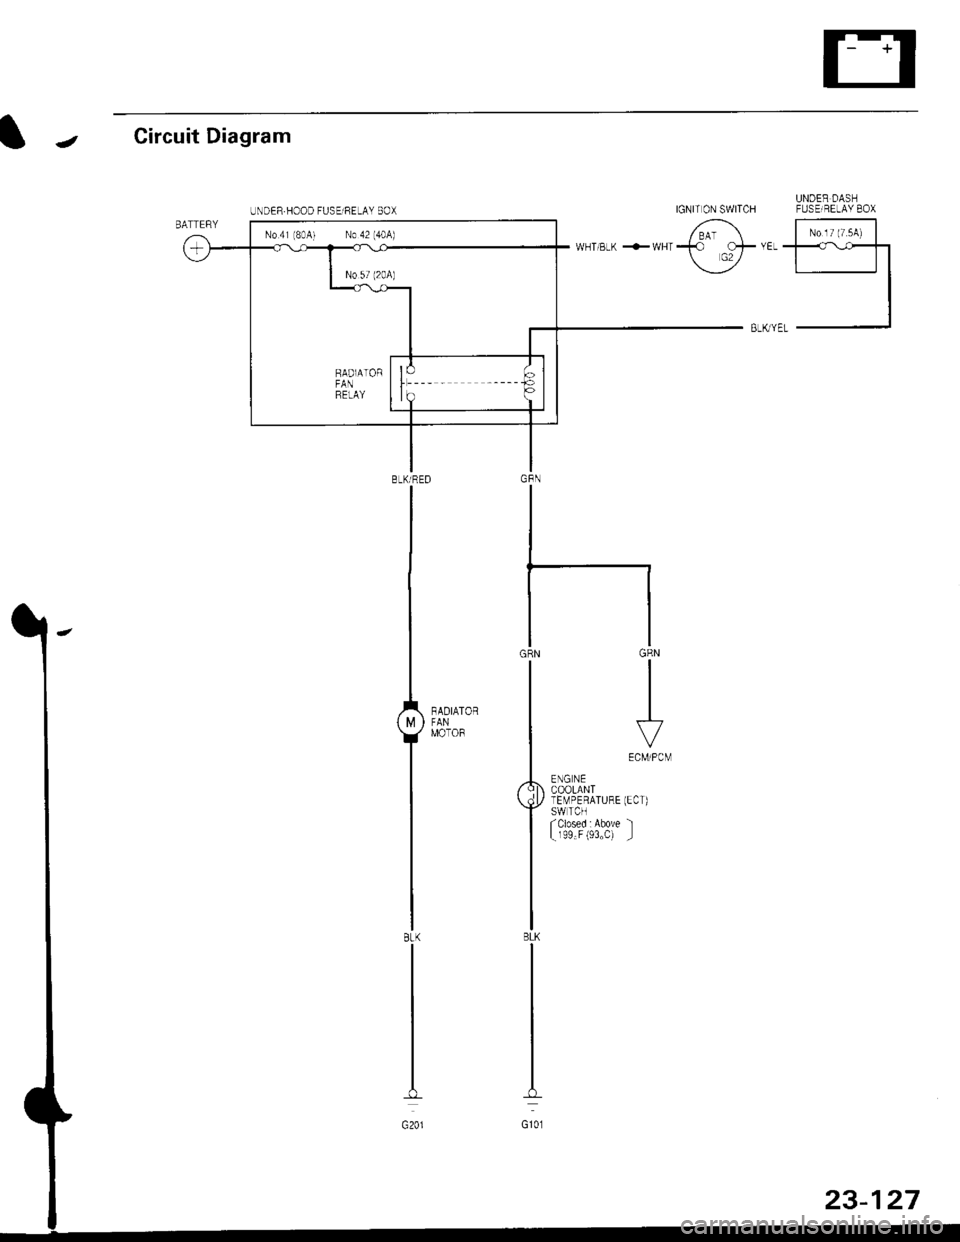 HONDA CIVIC 1998 6.G Workshop Manual IJCircuit Diagram
UNDER DASHIGNIT ON SWITCH FUSEIRELAY 8OX
6 |-;;;;lii "ir"t*Tl-l
BLK yEL -J
GRN
III
I
\.7VECM/PCM
ENG NECOOLANTlEMPERATURE (ECT)SWTCHfclosed : Above l
L r99"F (93"C) _l
BLKTRED
I
I
